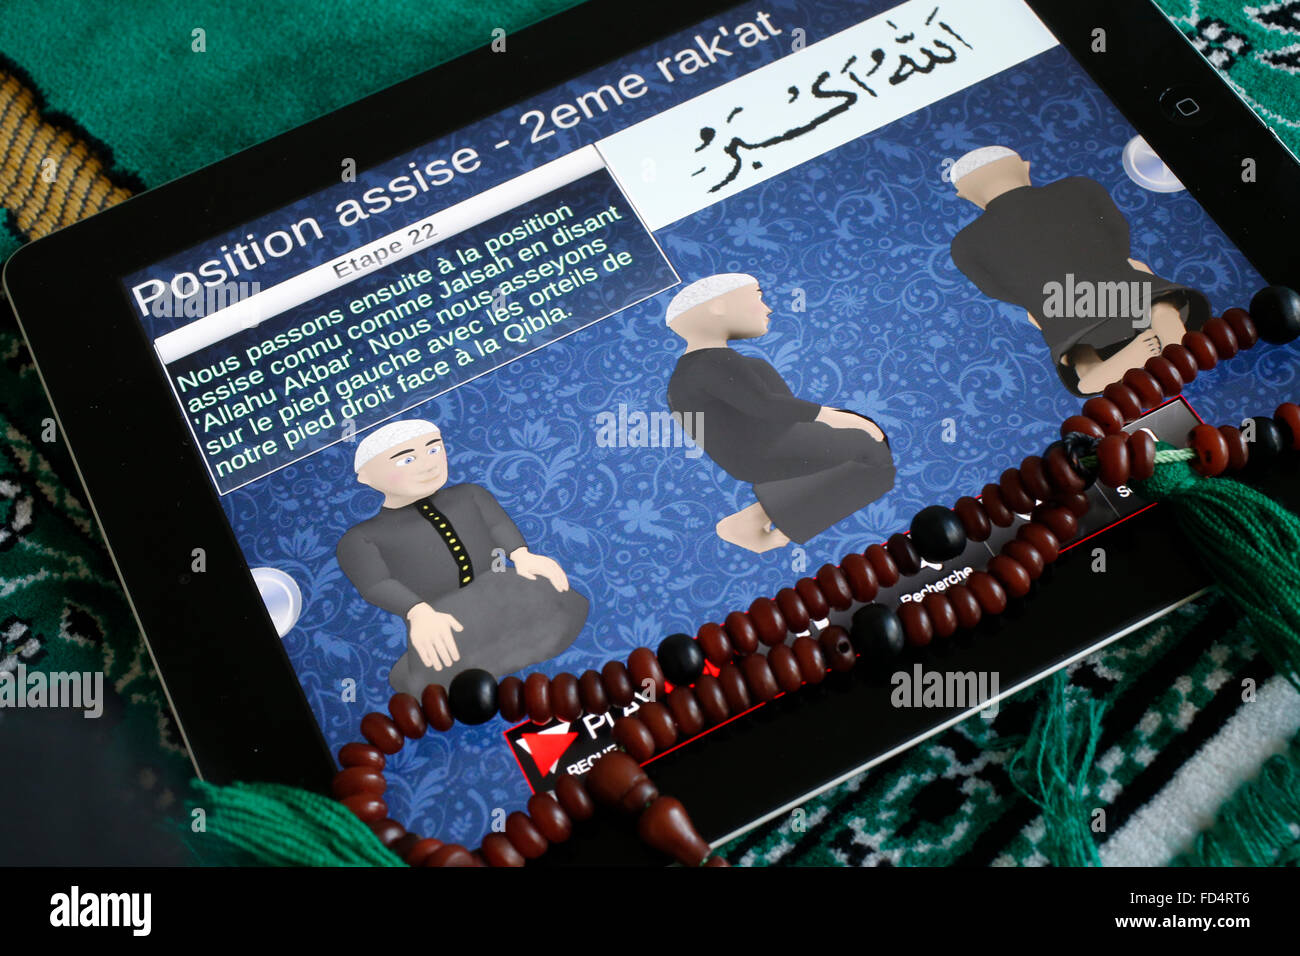 Teaching of the five islamic daily prayers (Salat) on an Ipad. Stock Photo